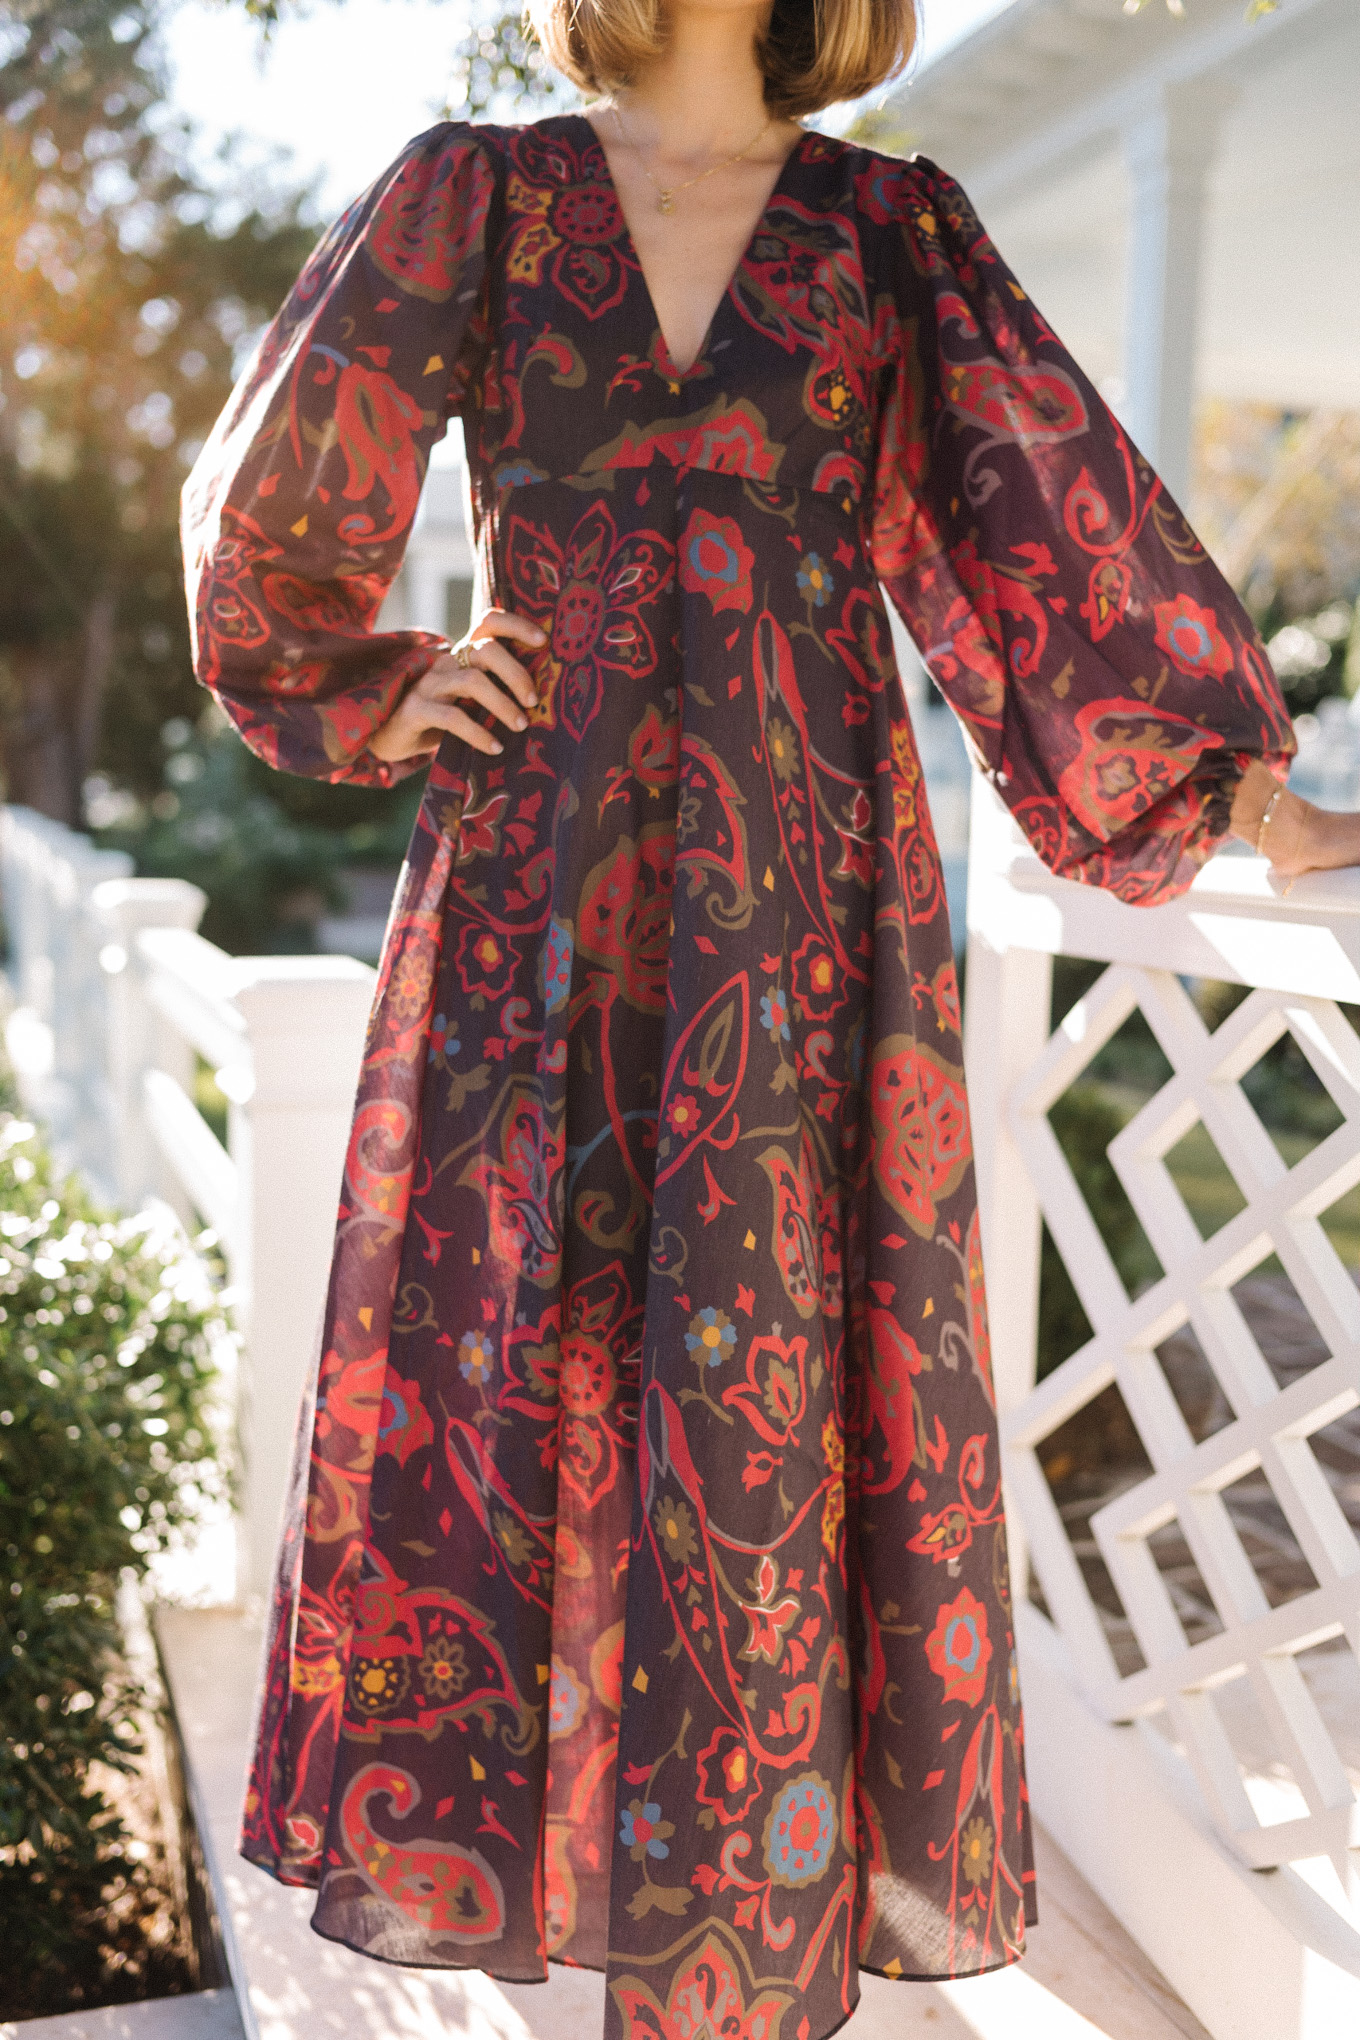 long sleeve floral print dress in burgundy